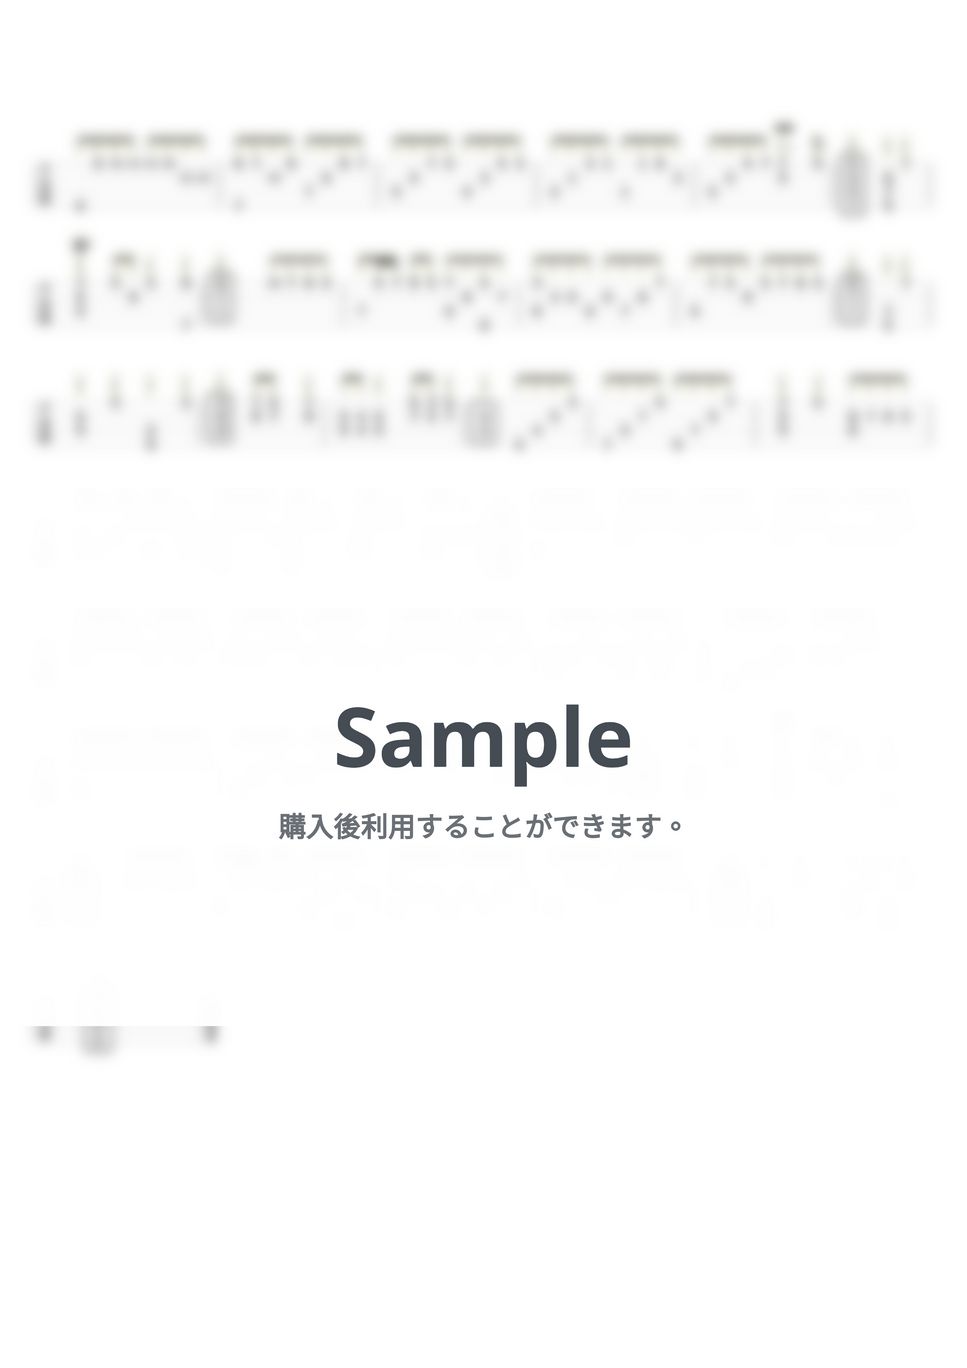 J.S.バッハ - ガボット～リュート組曲第4番より～ (ｳｸﾚﾚｿﾛTAB譜 / Low-G / 上級) by ukulelepapa